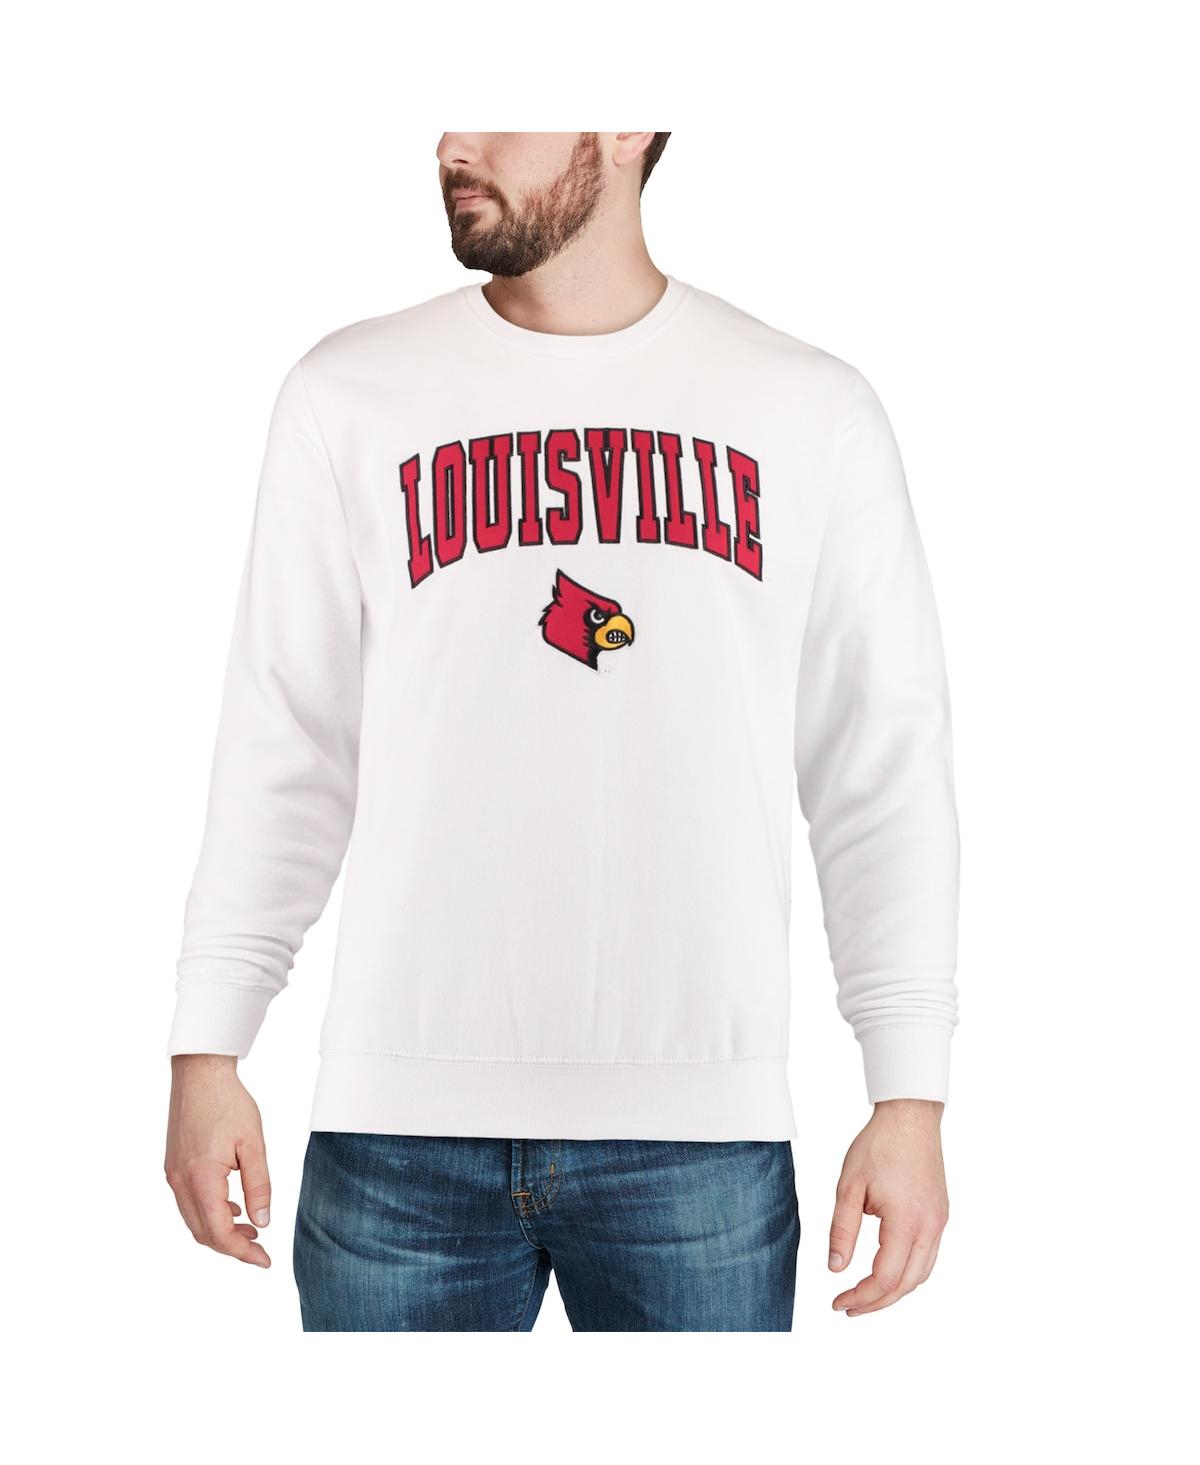 Colosseum Men's Louisville Cardinals Grey Pullover Hoodie